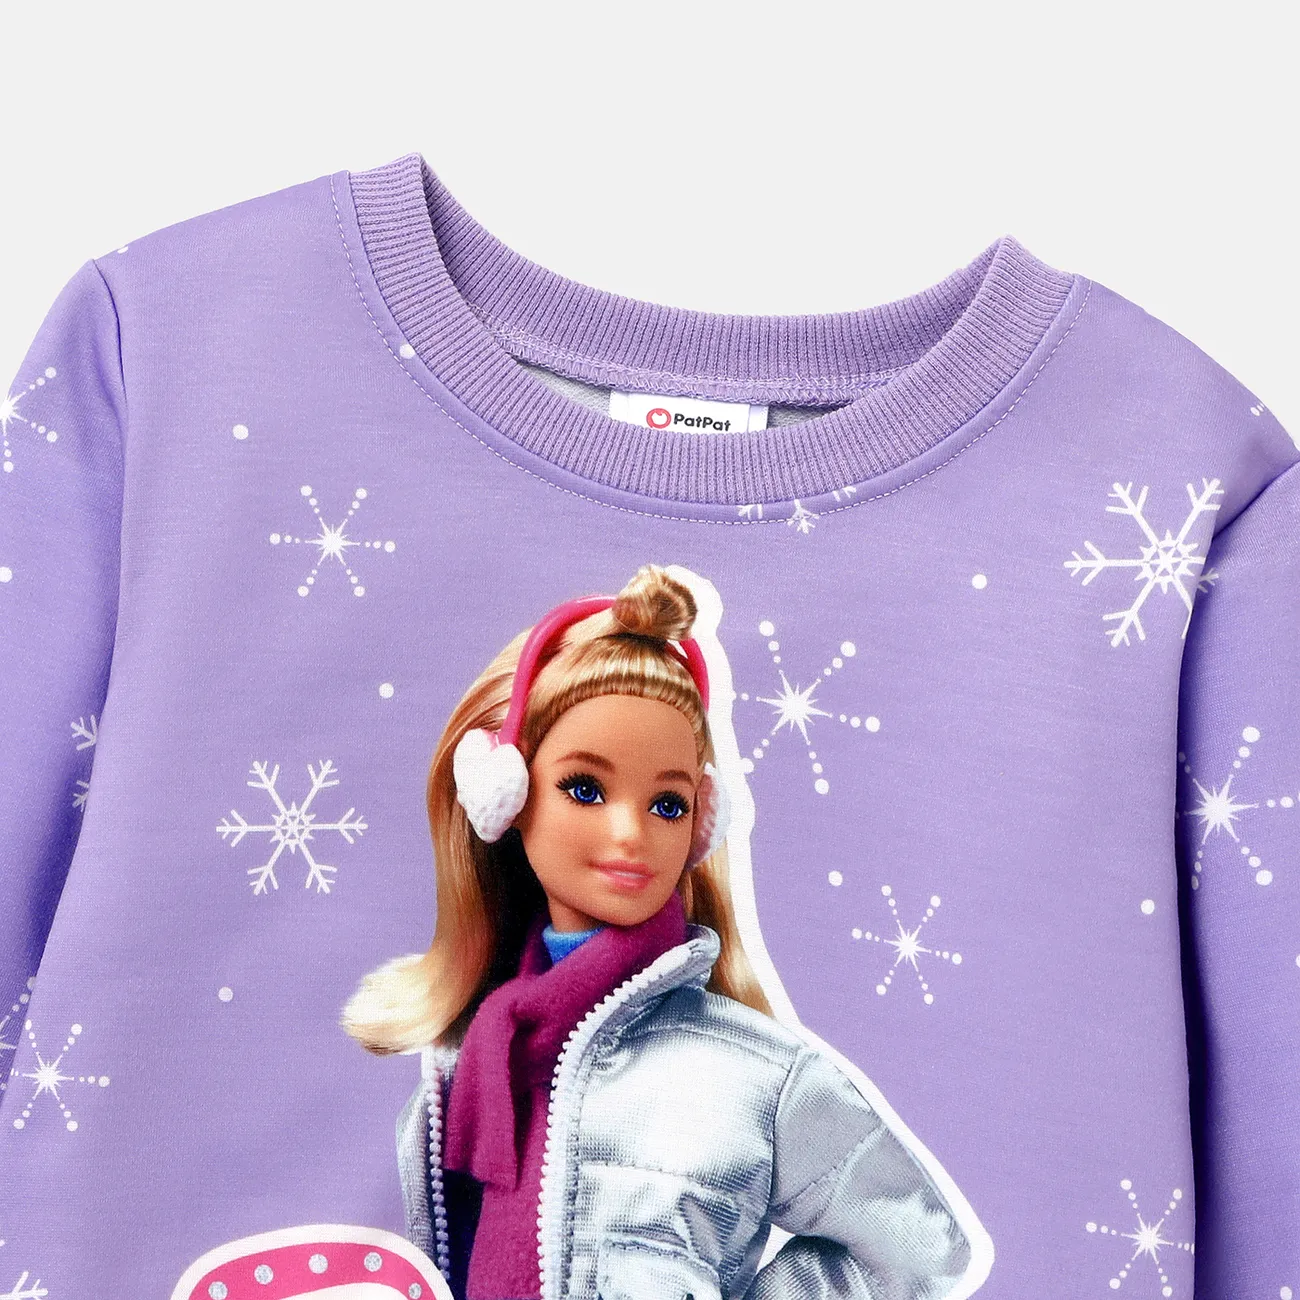 Barbie Toddler Girl Snowflake and Character Print Long-sleeve Sweatshrit Purple big image 1